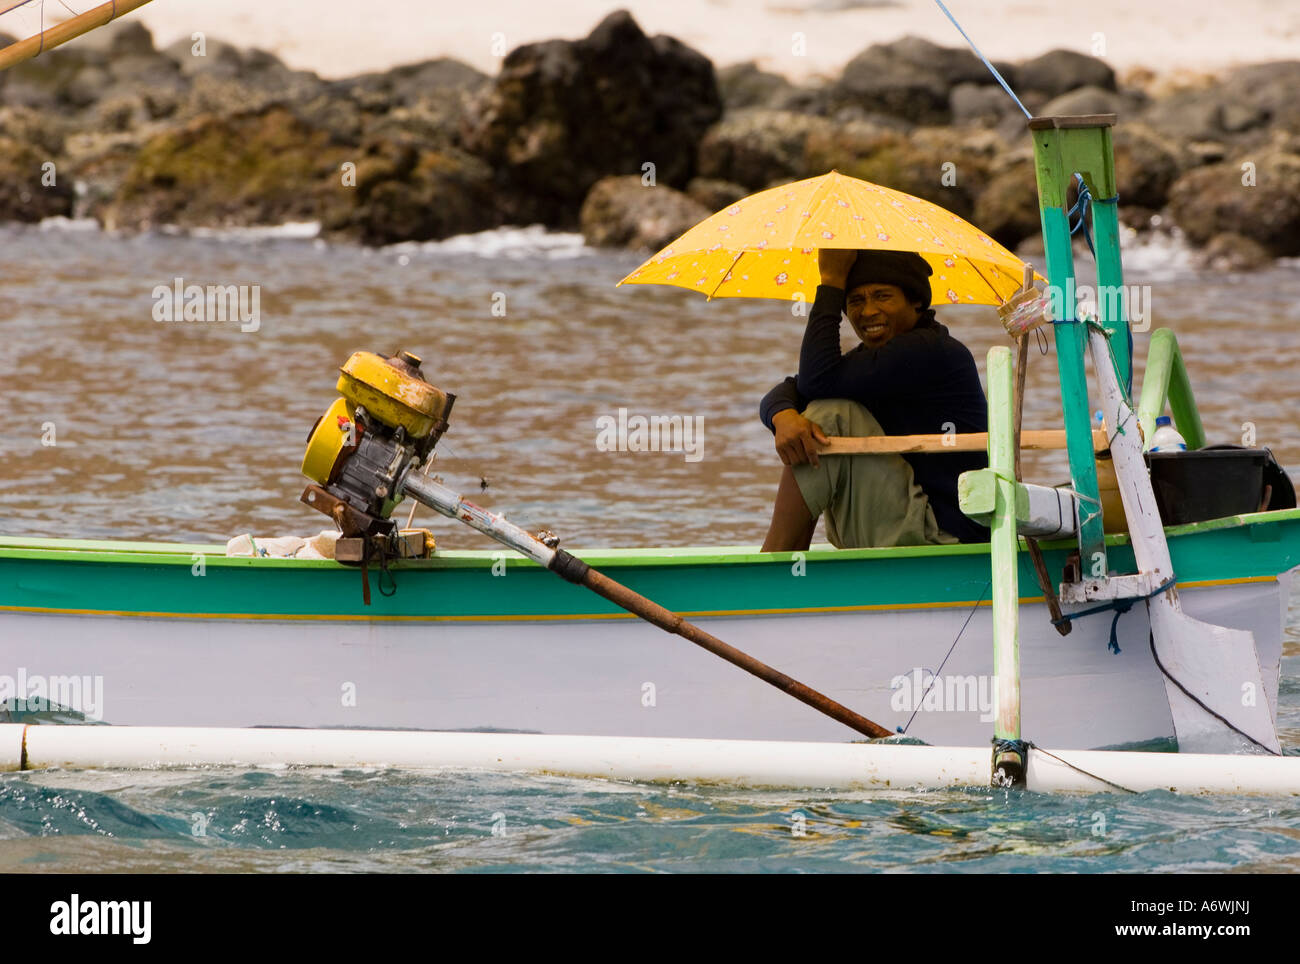 fisherman holding umbrella on boat Stock Photo - Alamy